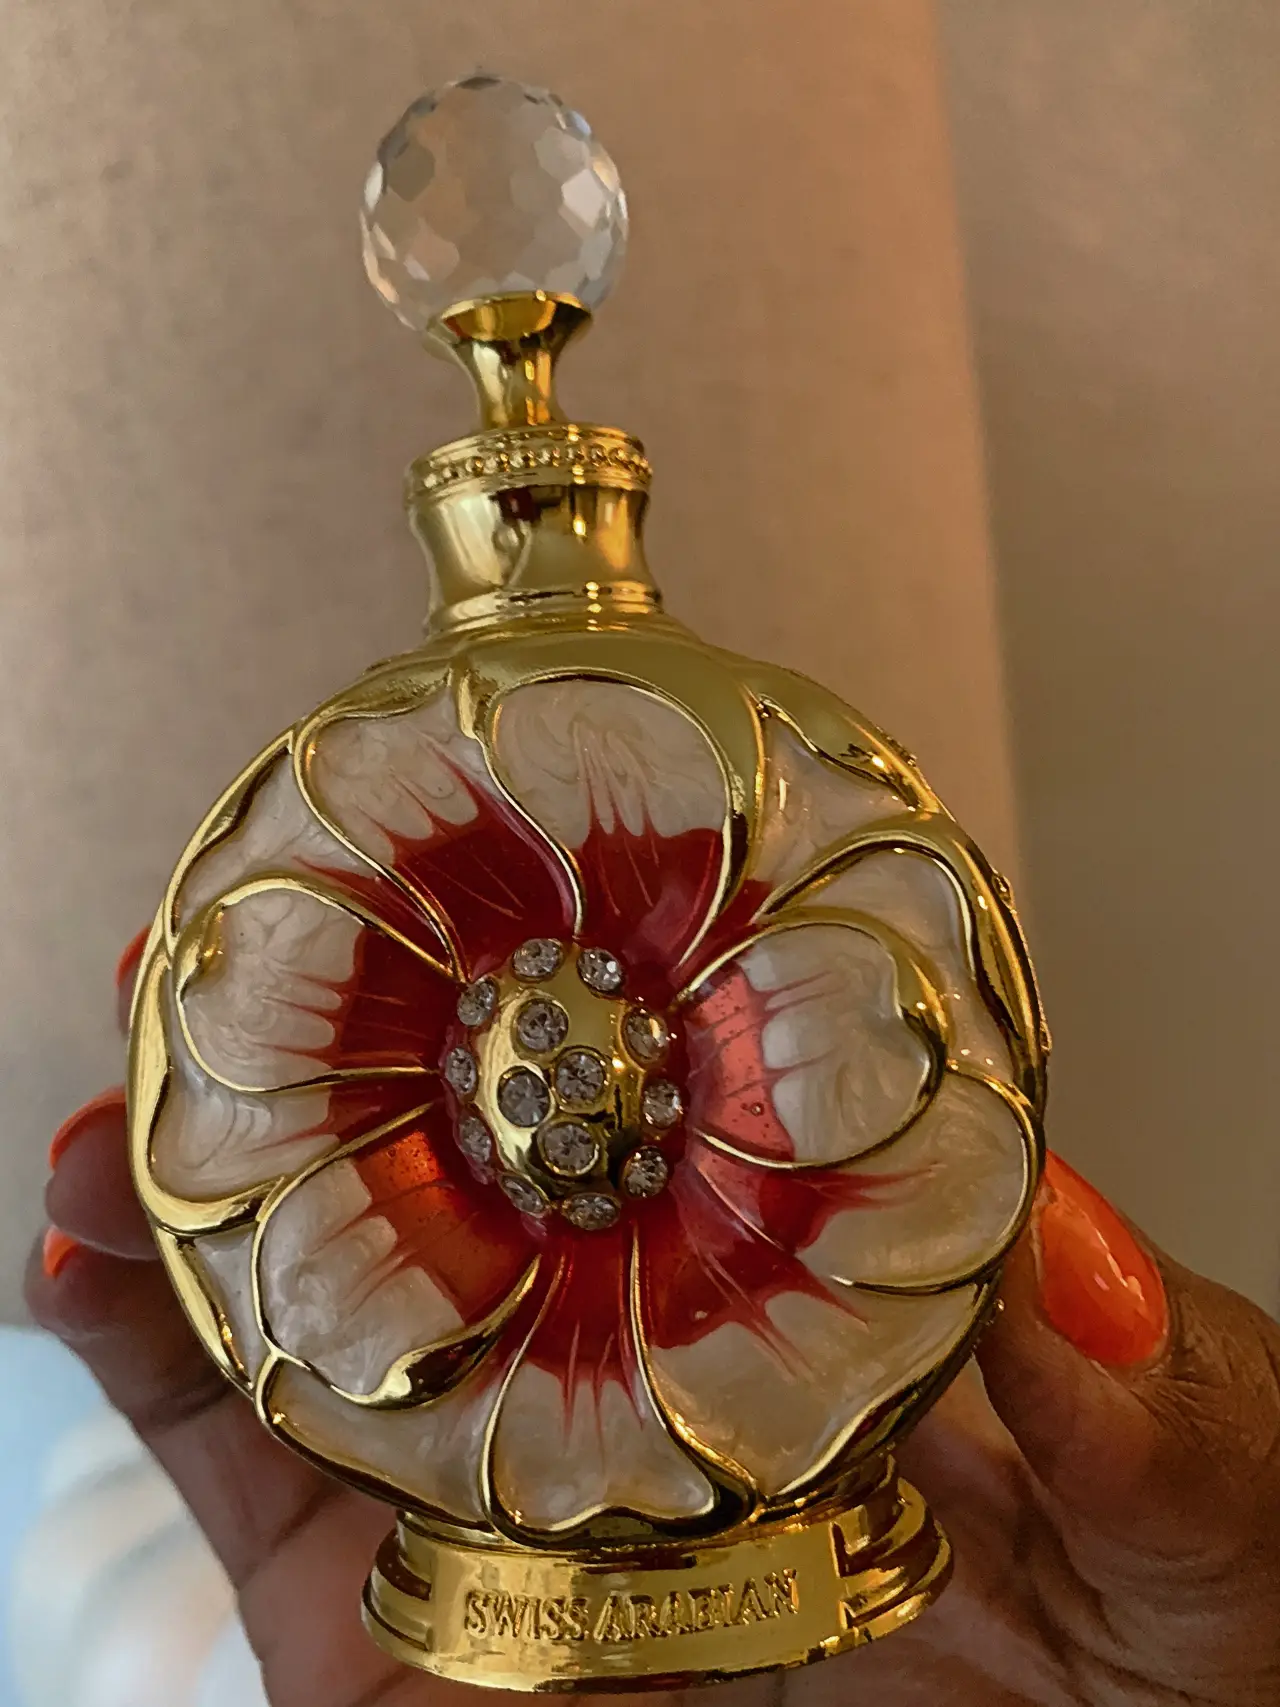 SWISS ARABIAN Layali Rouge  Fragrance Review 